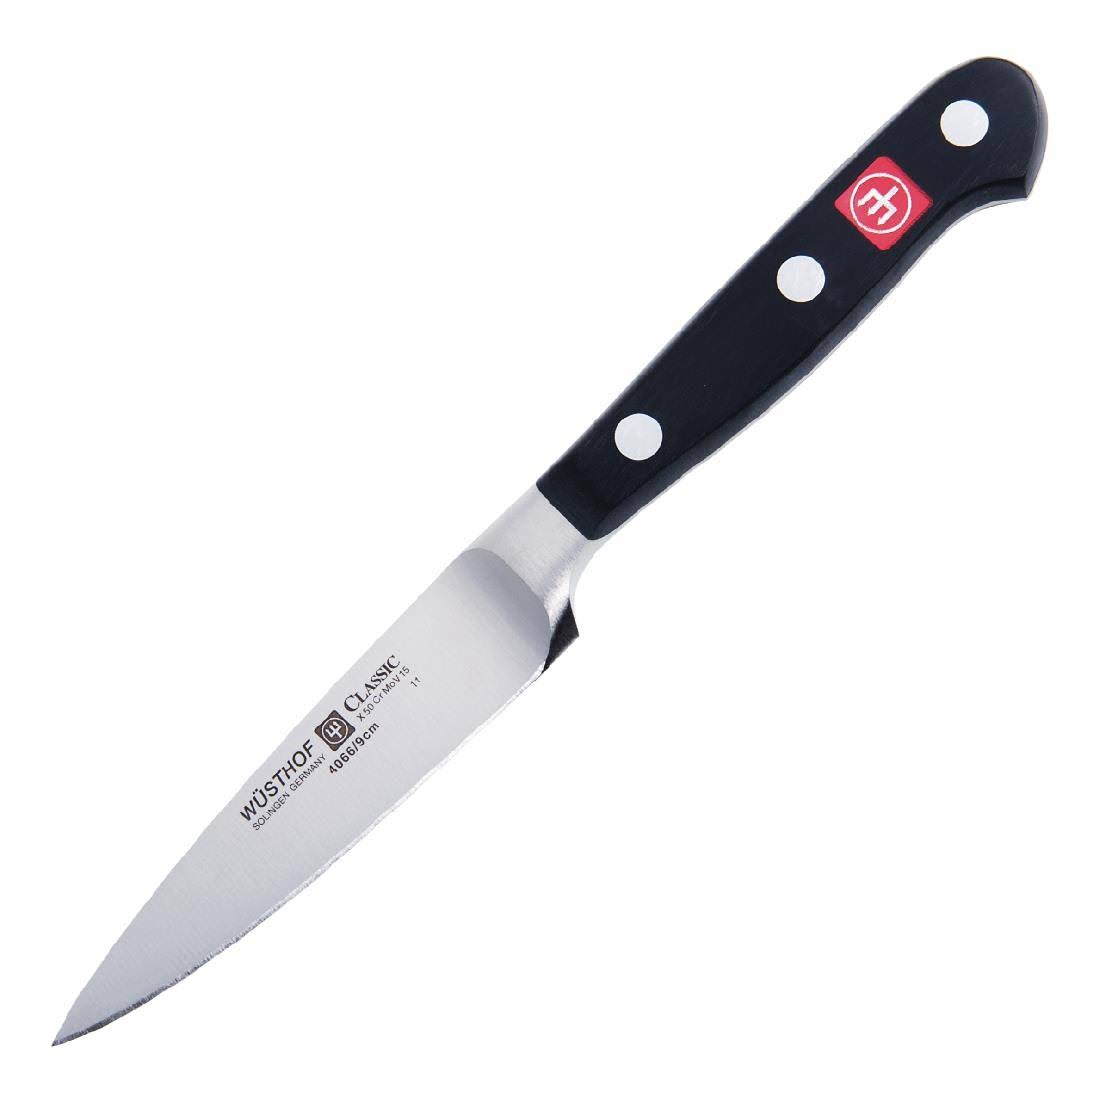 Wusthof Classic 9cm Paring Knife